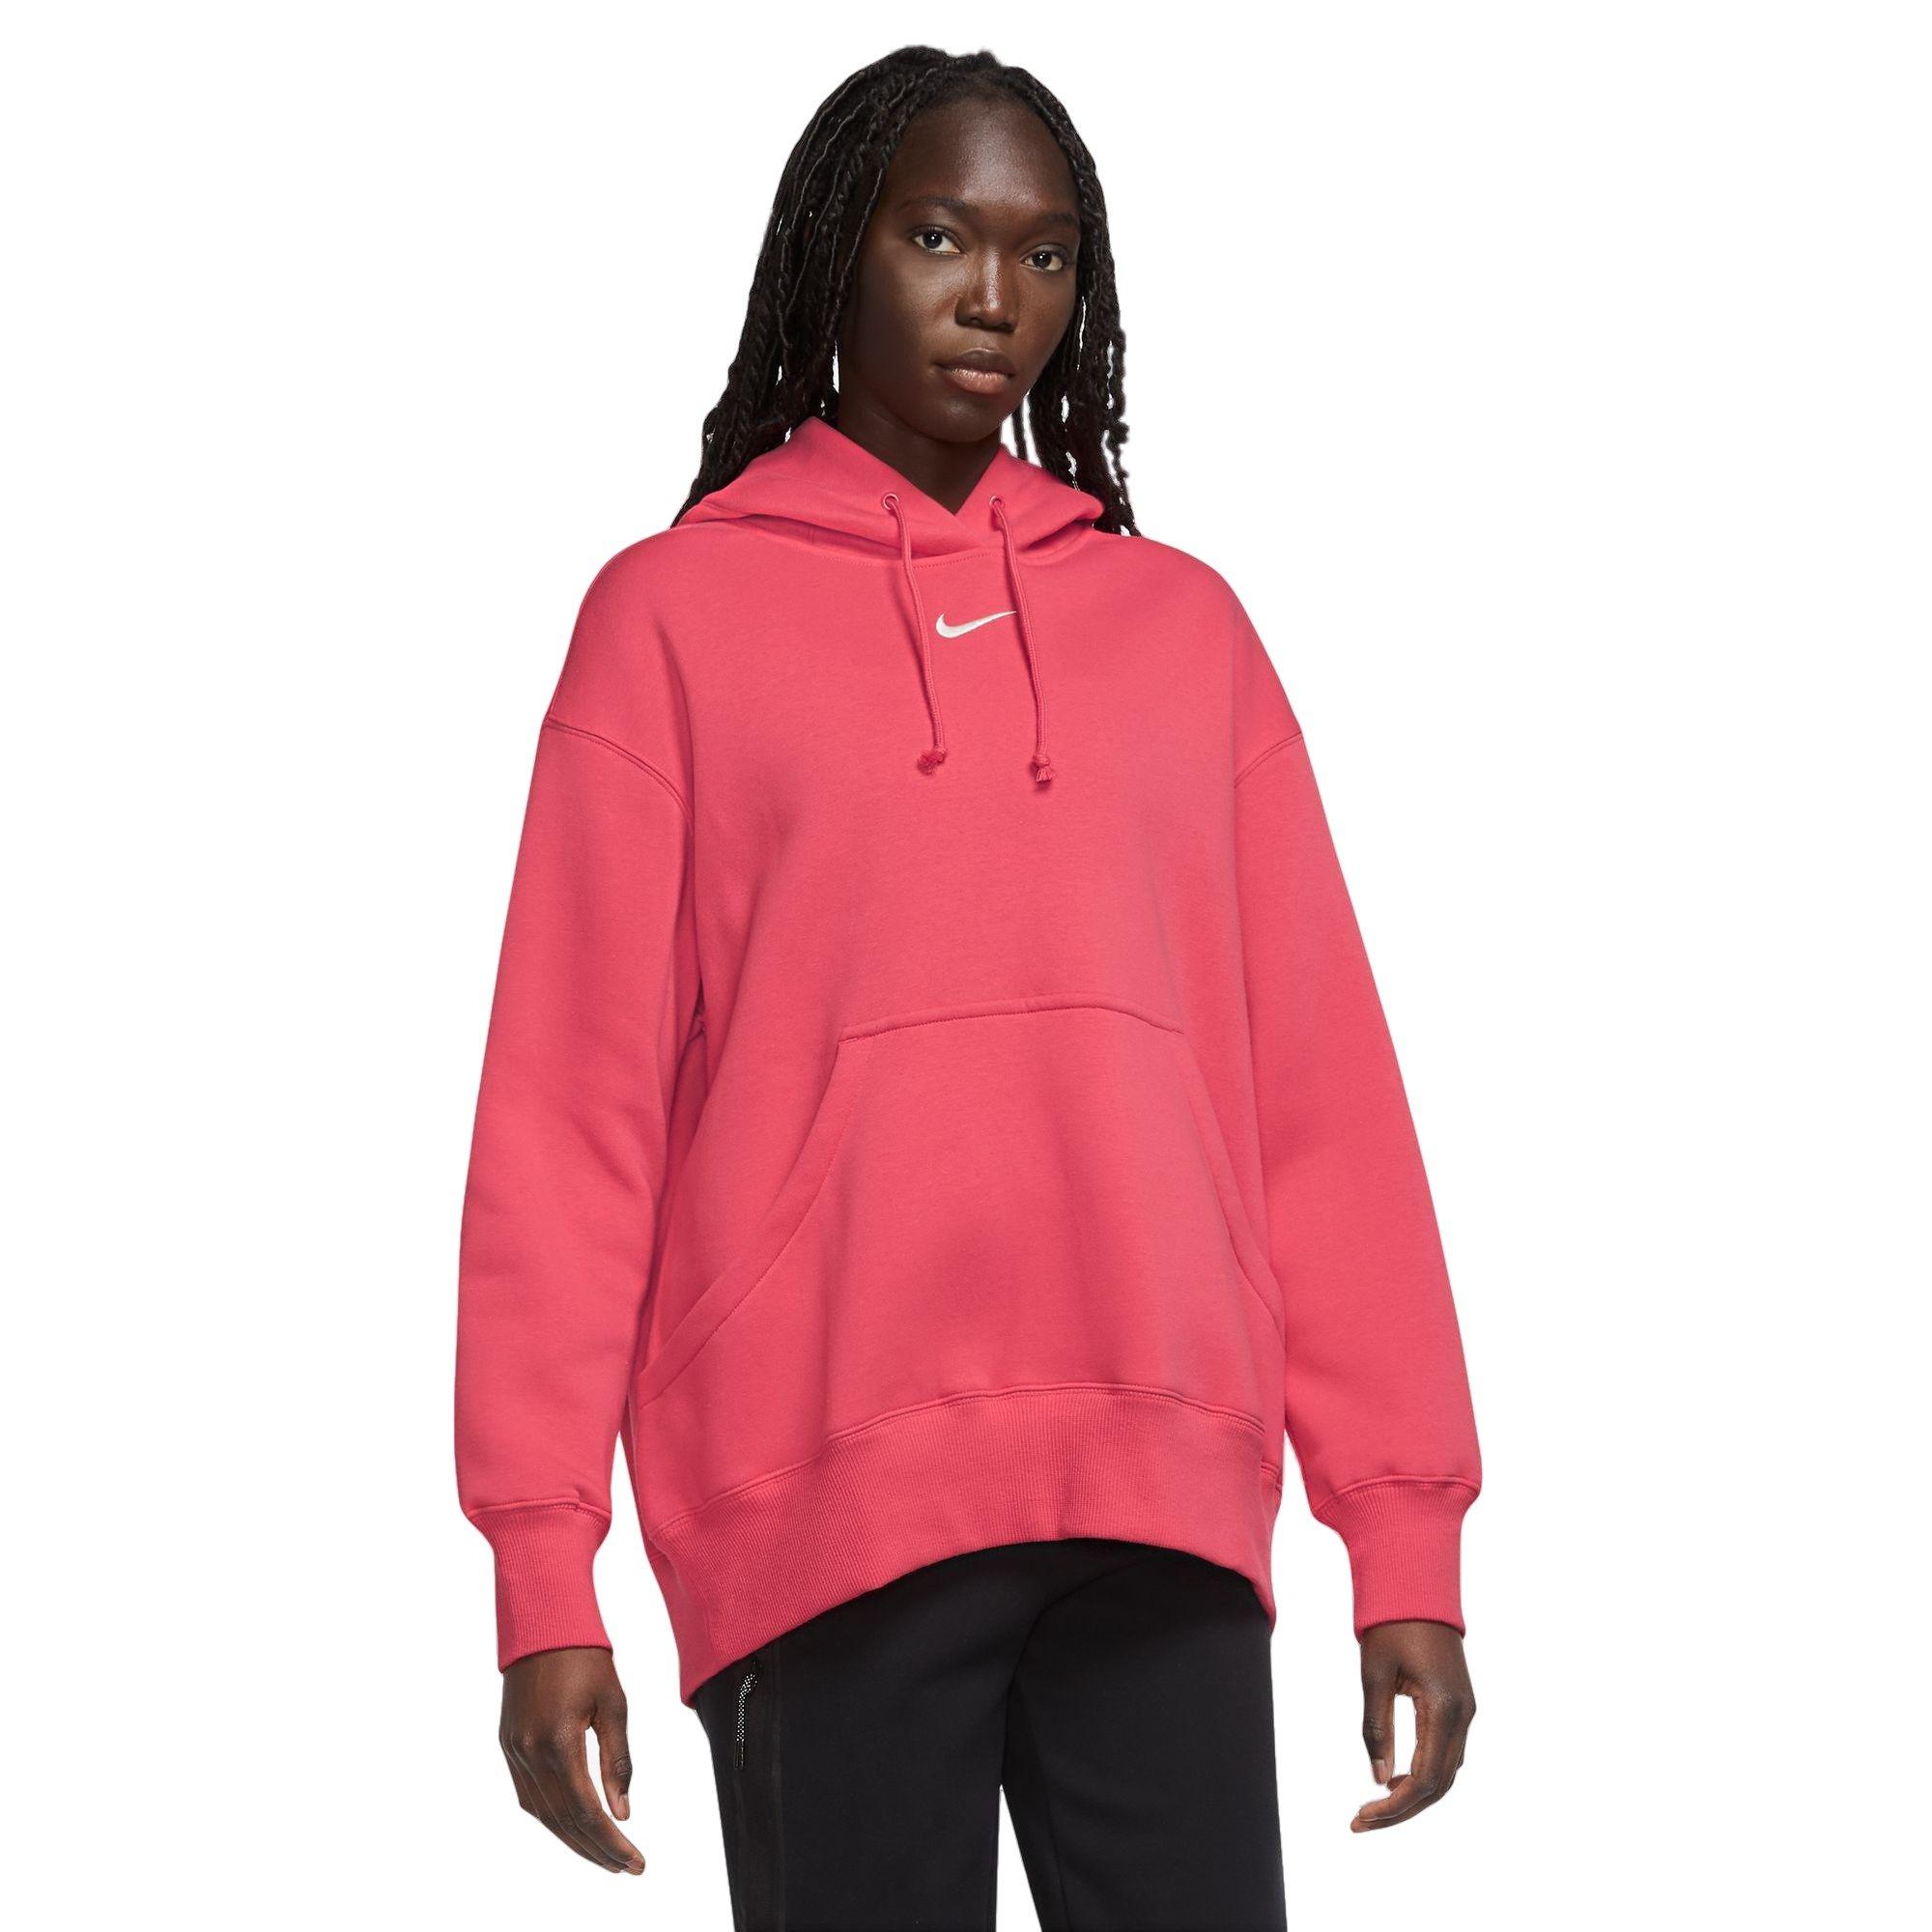 Nike Women's Phoenix Fleece Oversize Pullover Hoodie - Light